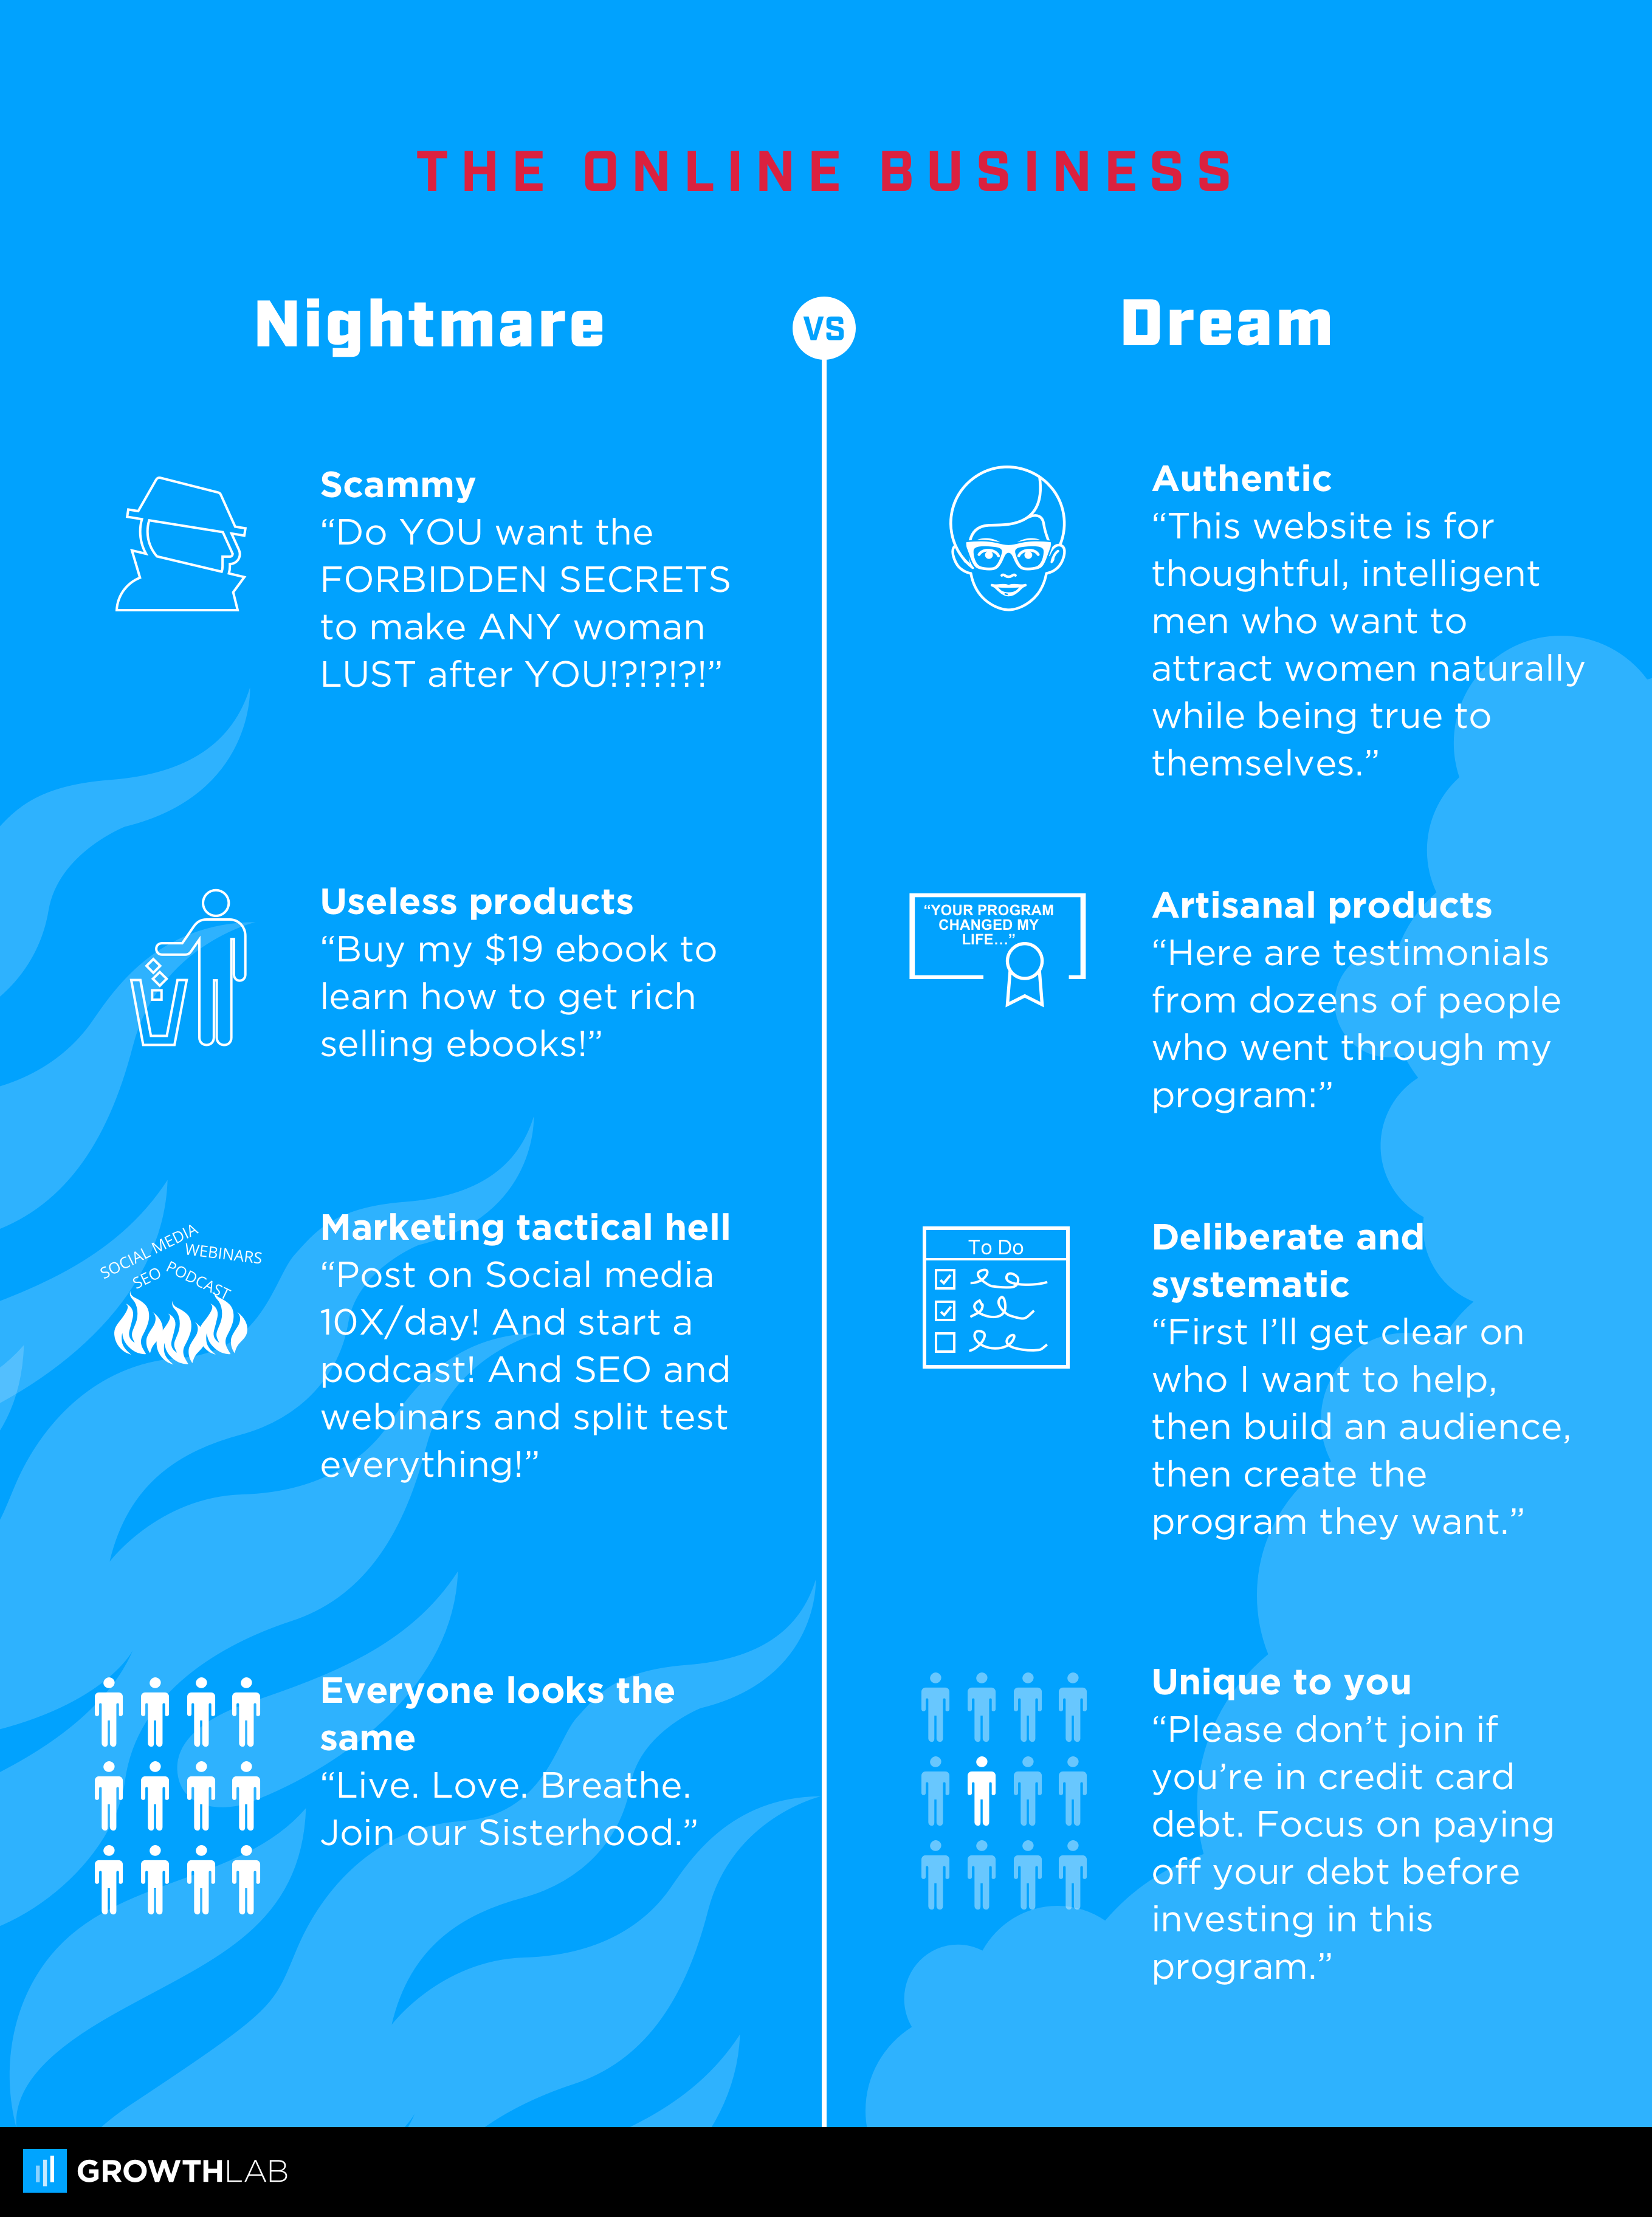 The Online Business Dream vs. Nightmare